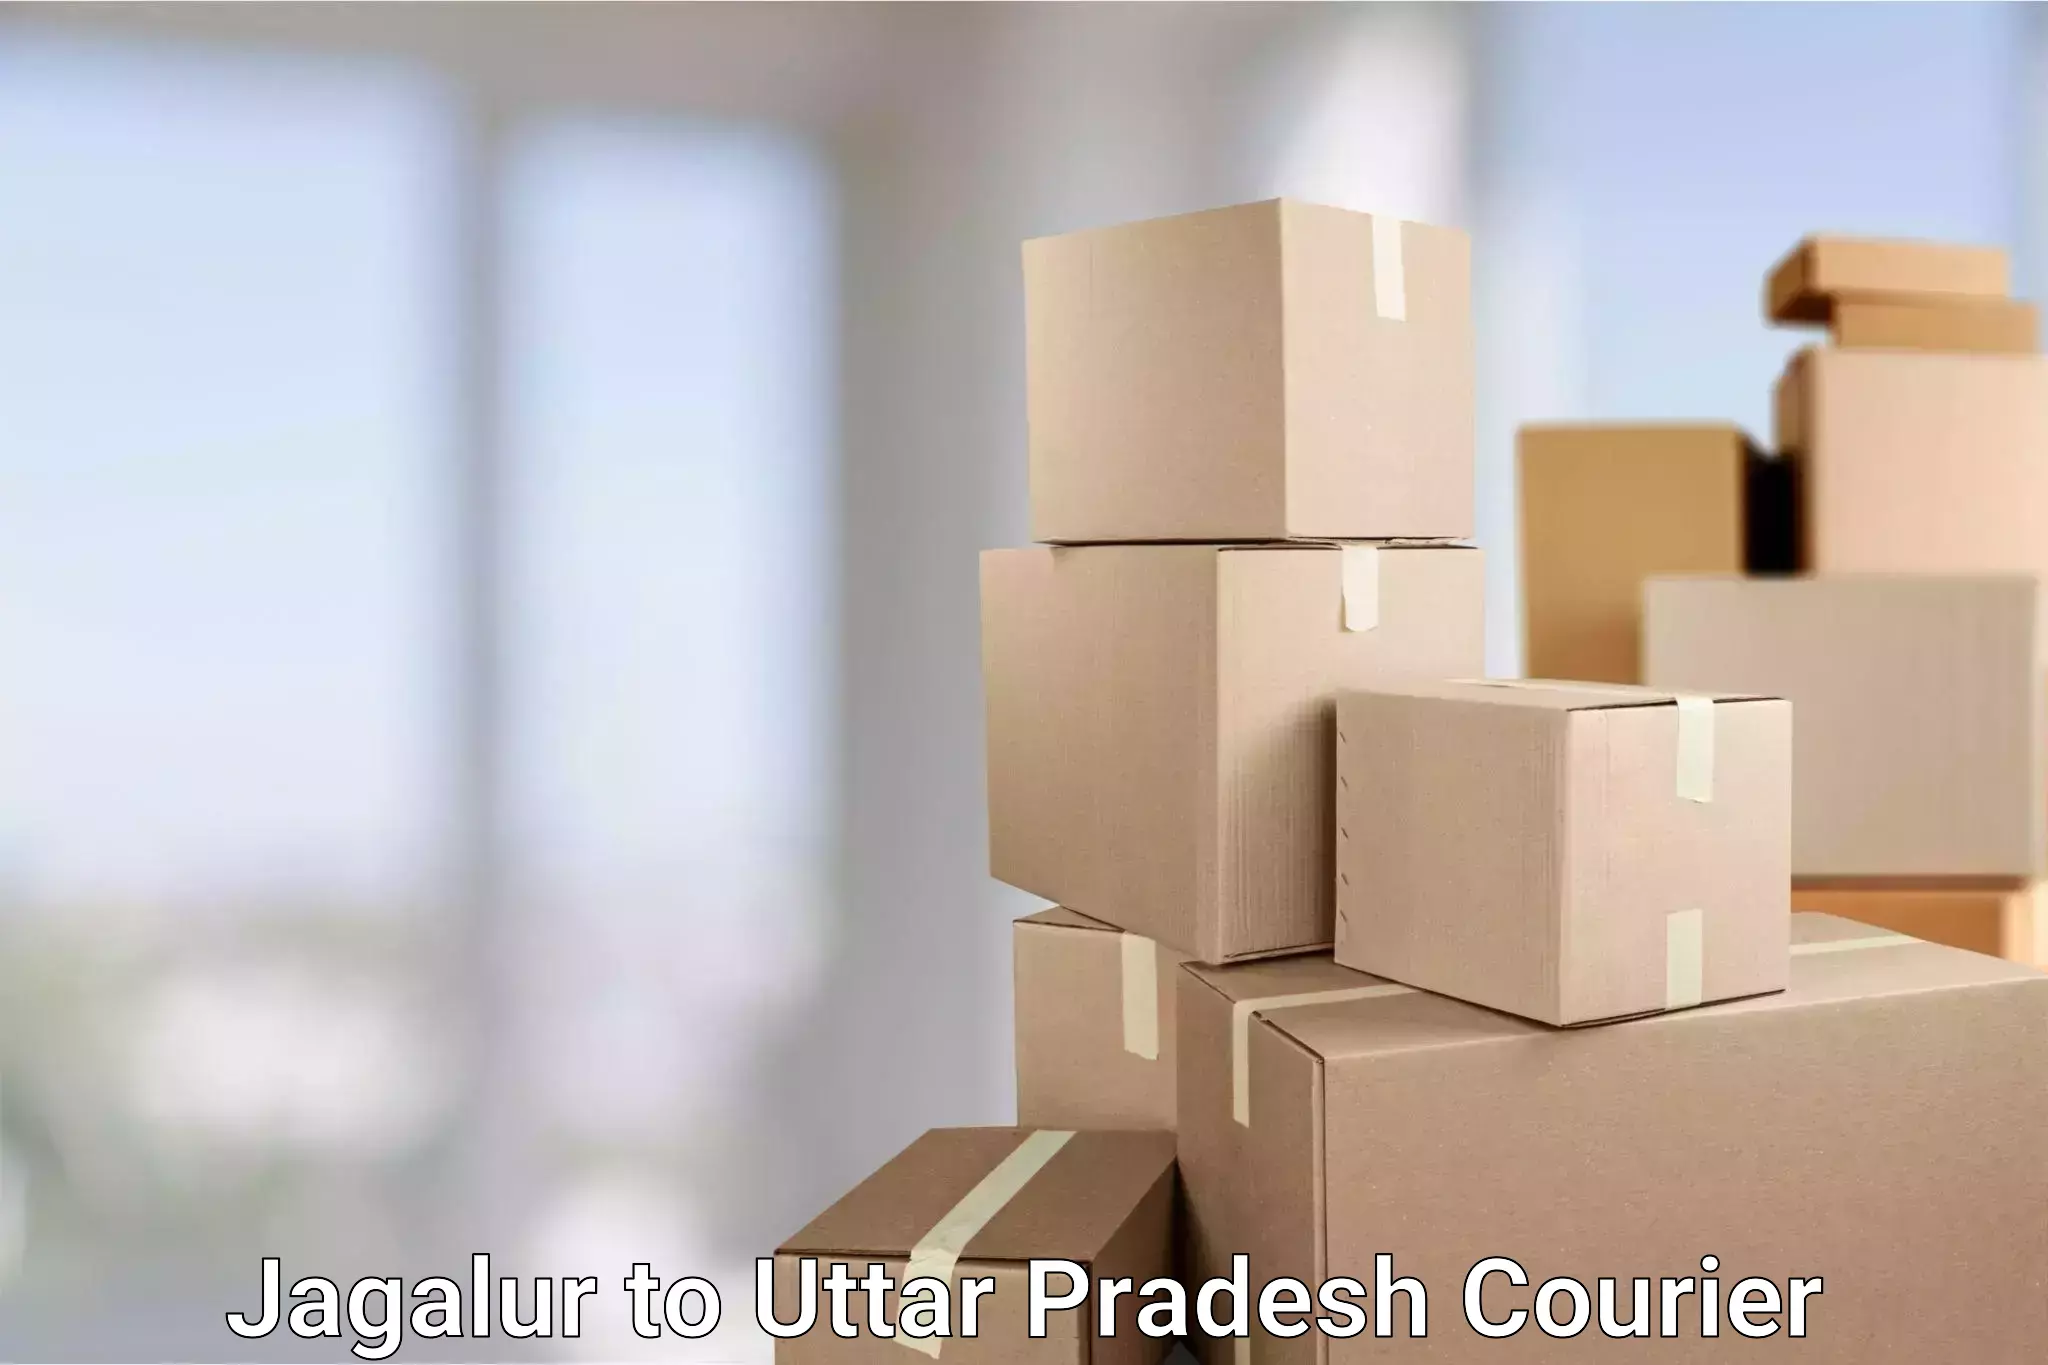 Doorstep parcel pickup Jagalur to Aligarh Muslim University